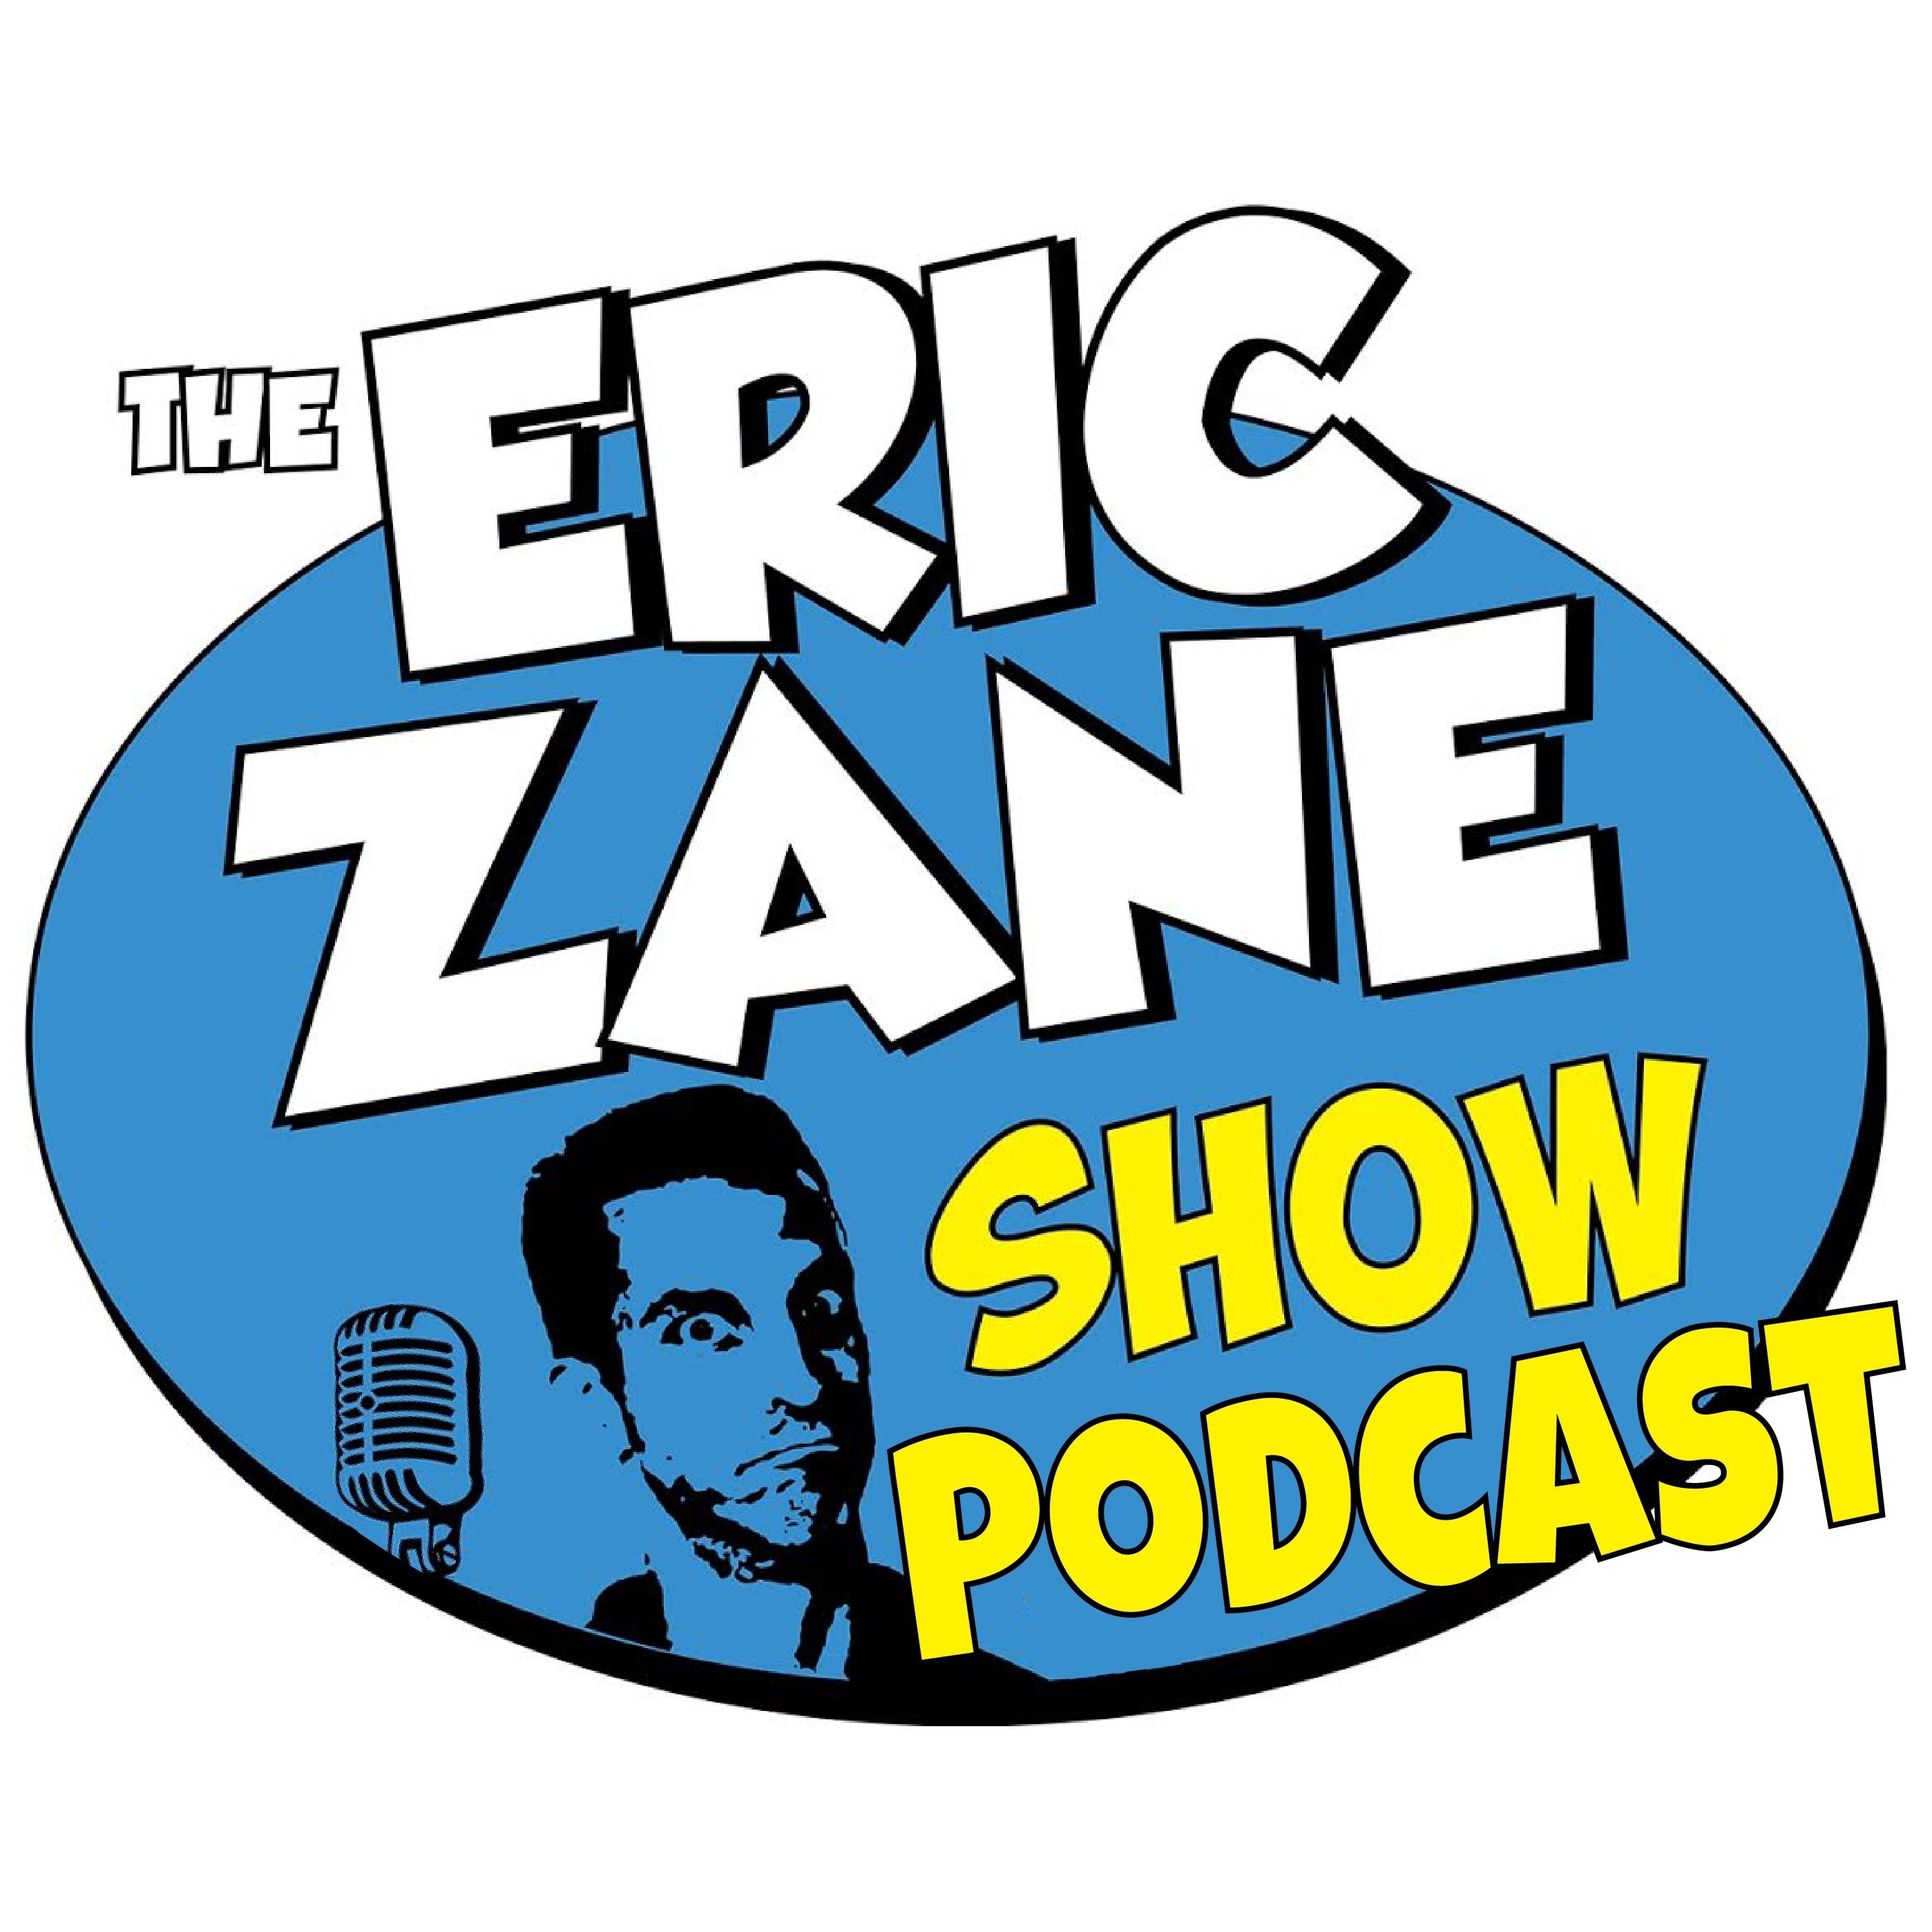 Eric Zane Show Podcast 969 - I gotta take care of my mentals